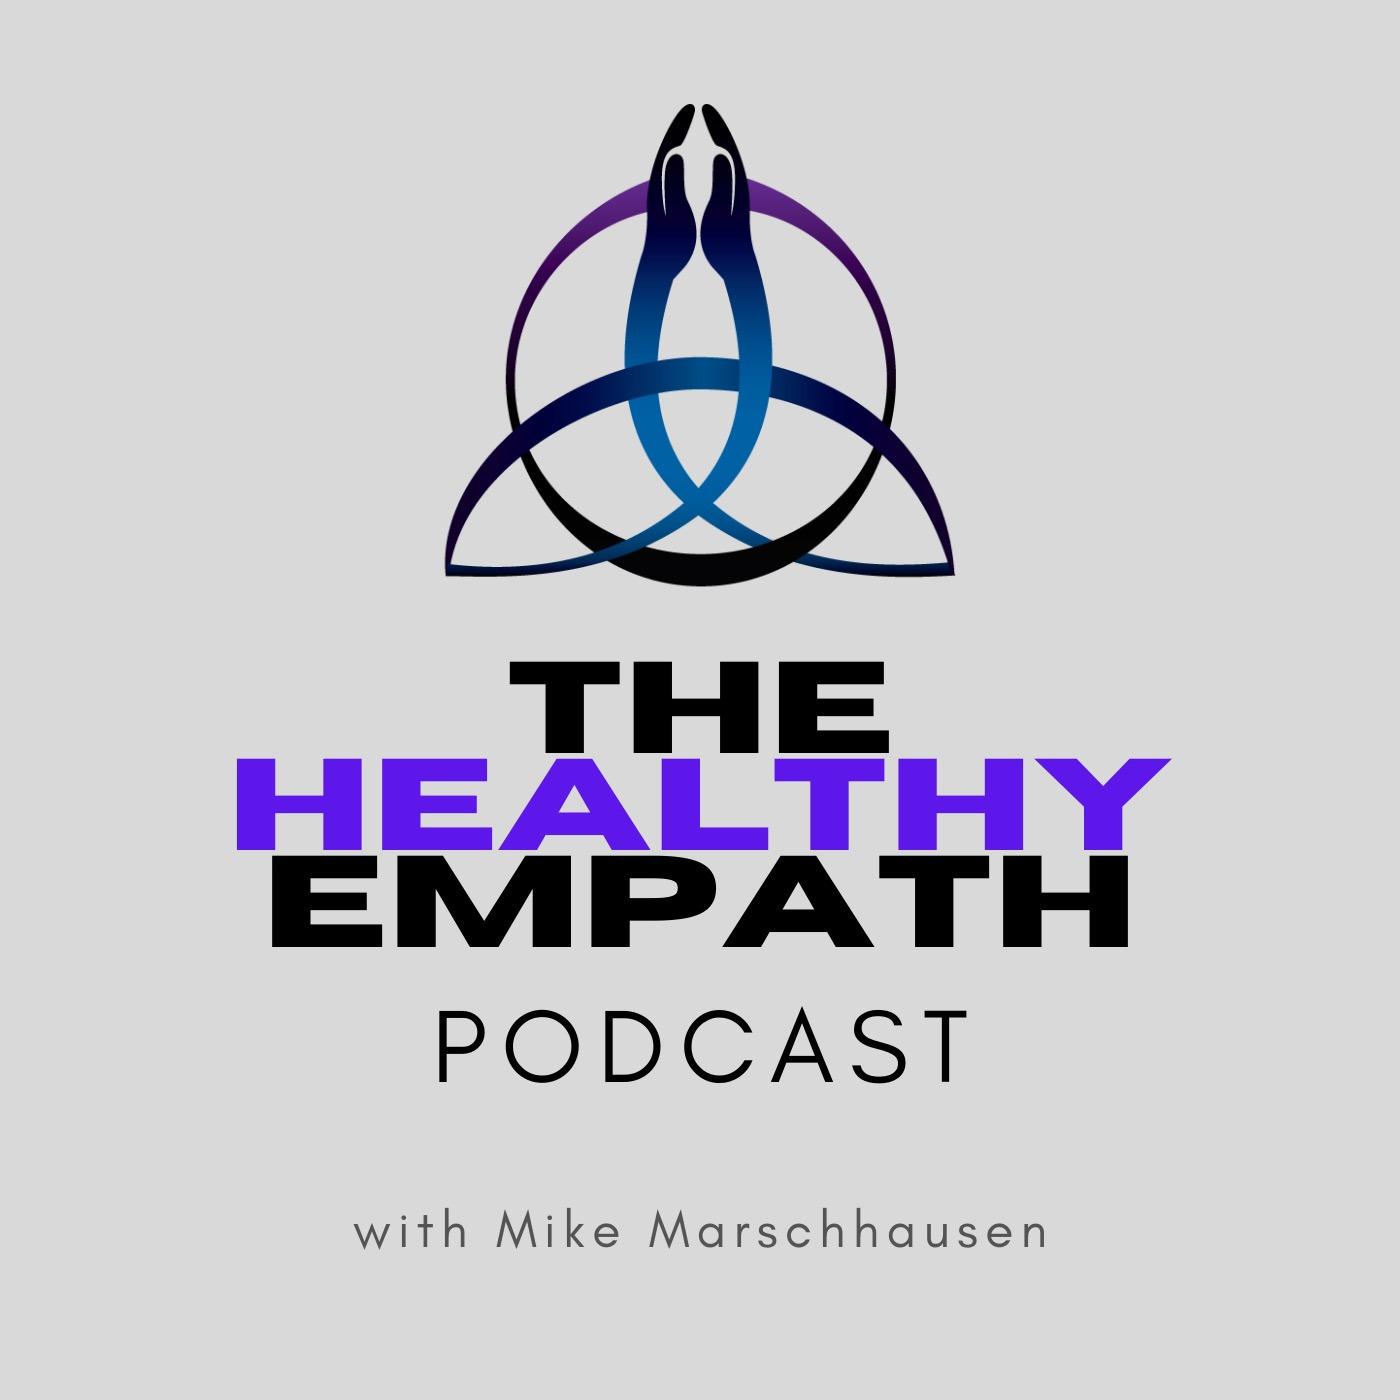 The Healthy Empath